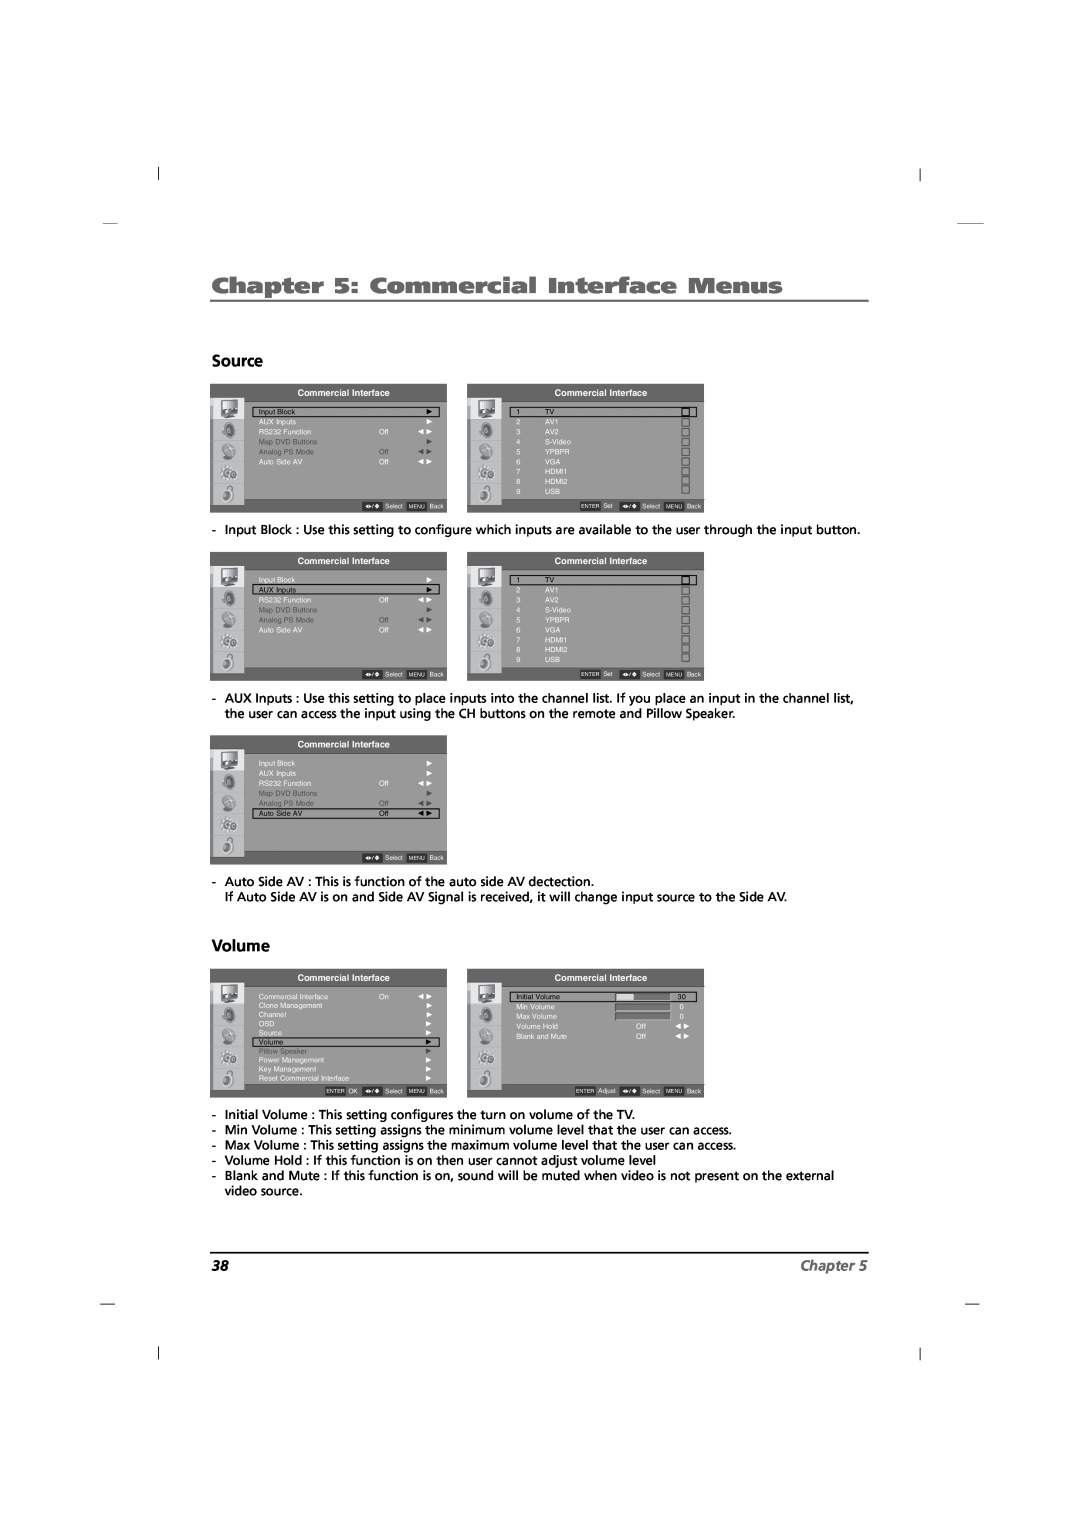 RCA J26CE820, J42CE820, J32CE720 manual Commercial Interface Menus, Source, Volume, Chapter 